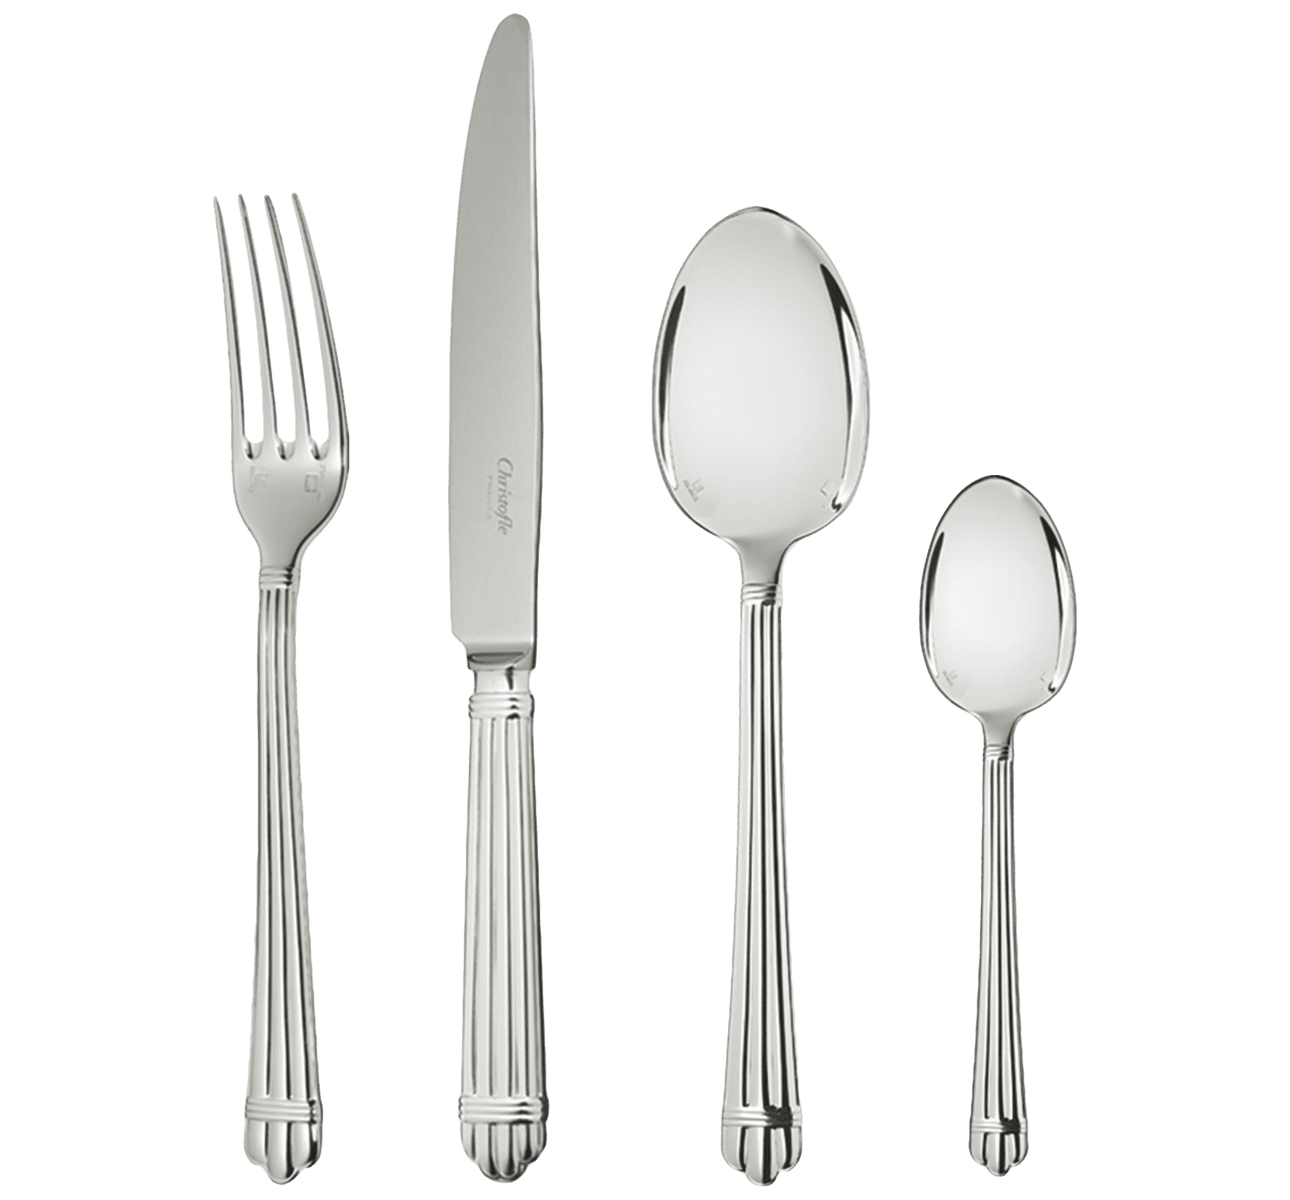 Royal Silver Plated English Cutlery 24 Piece Set - Urban Kitchen™